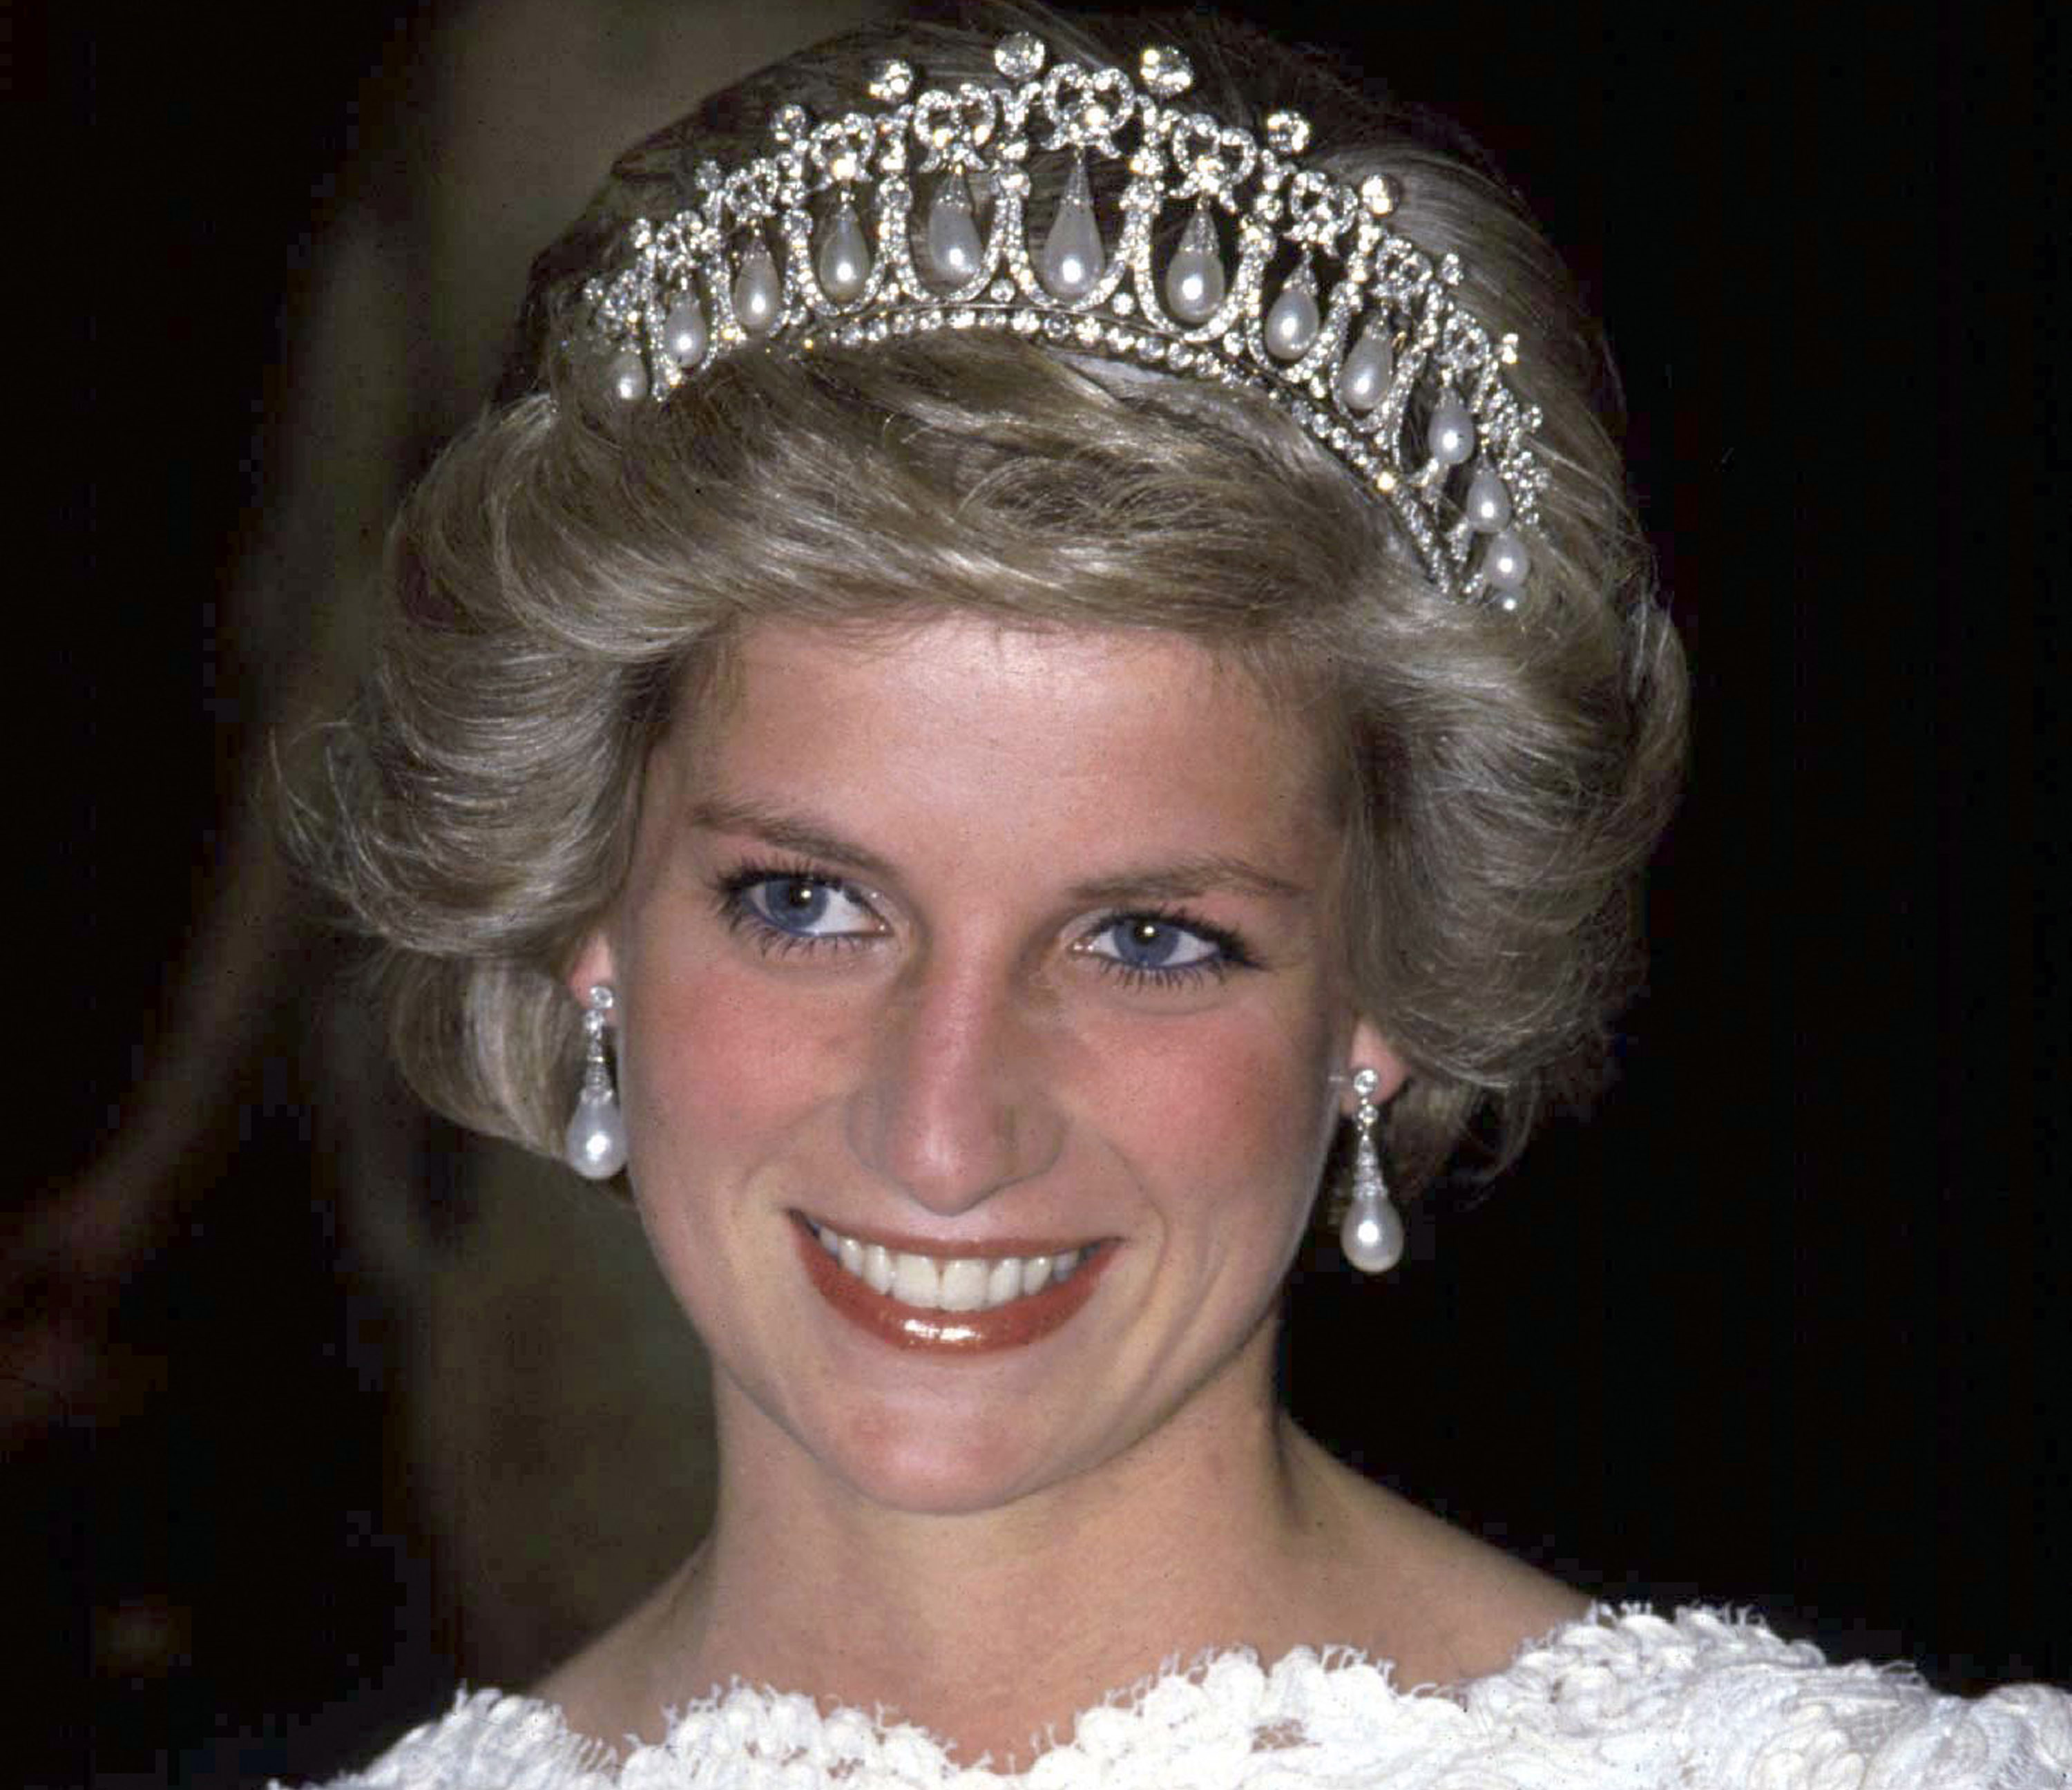 Princess Diana Getty Images